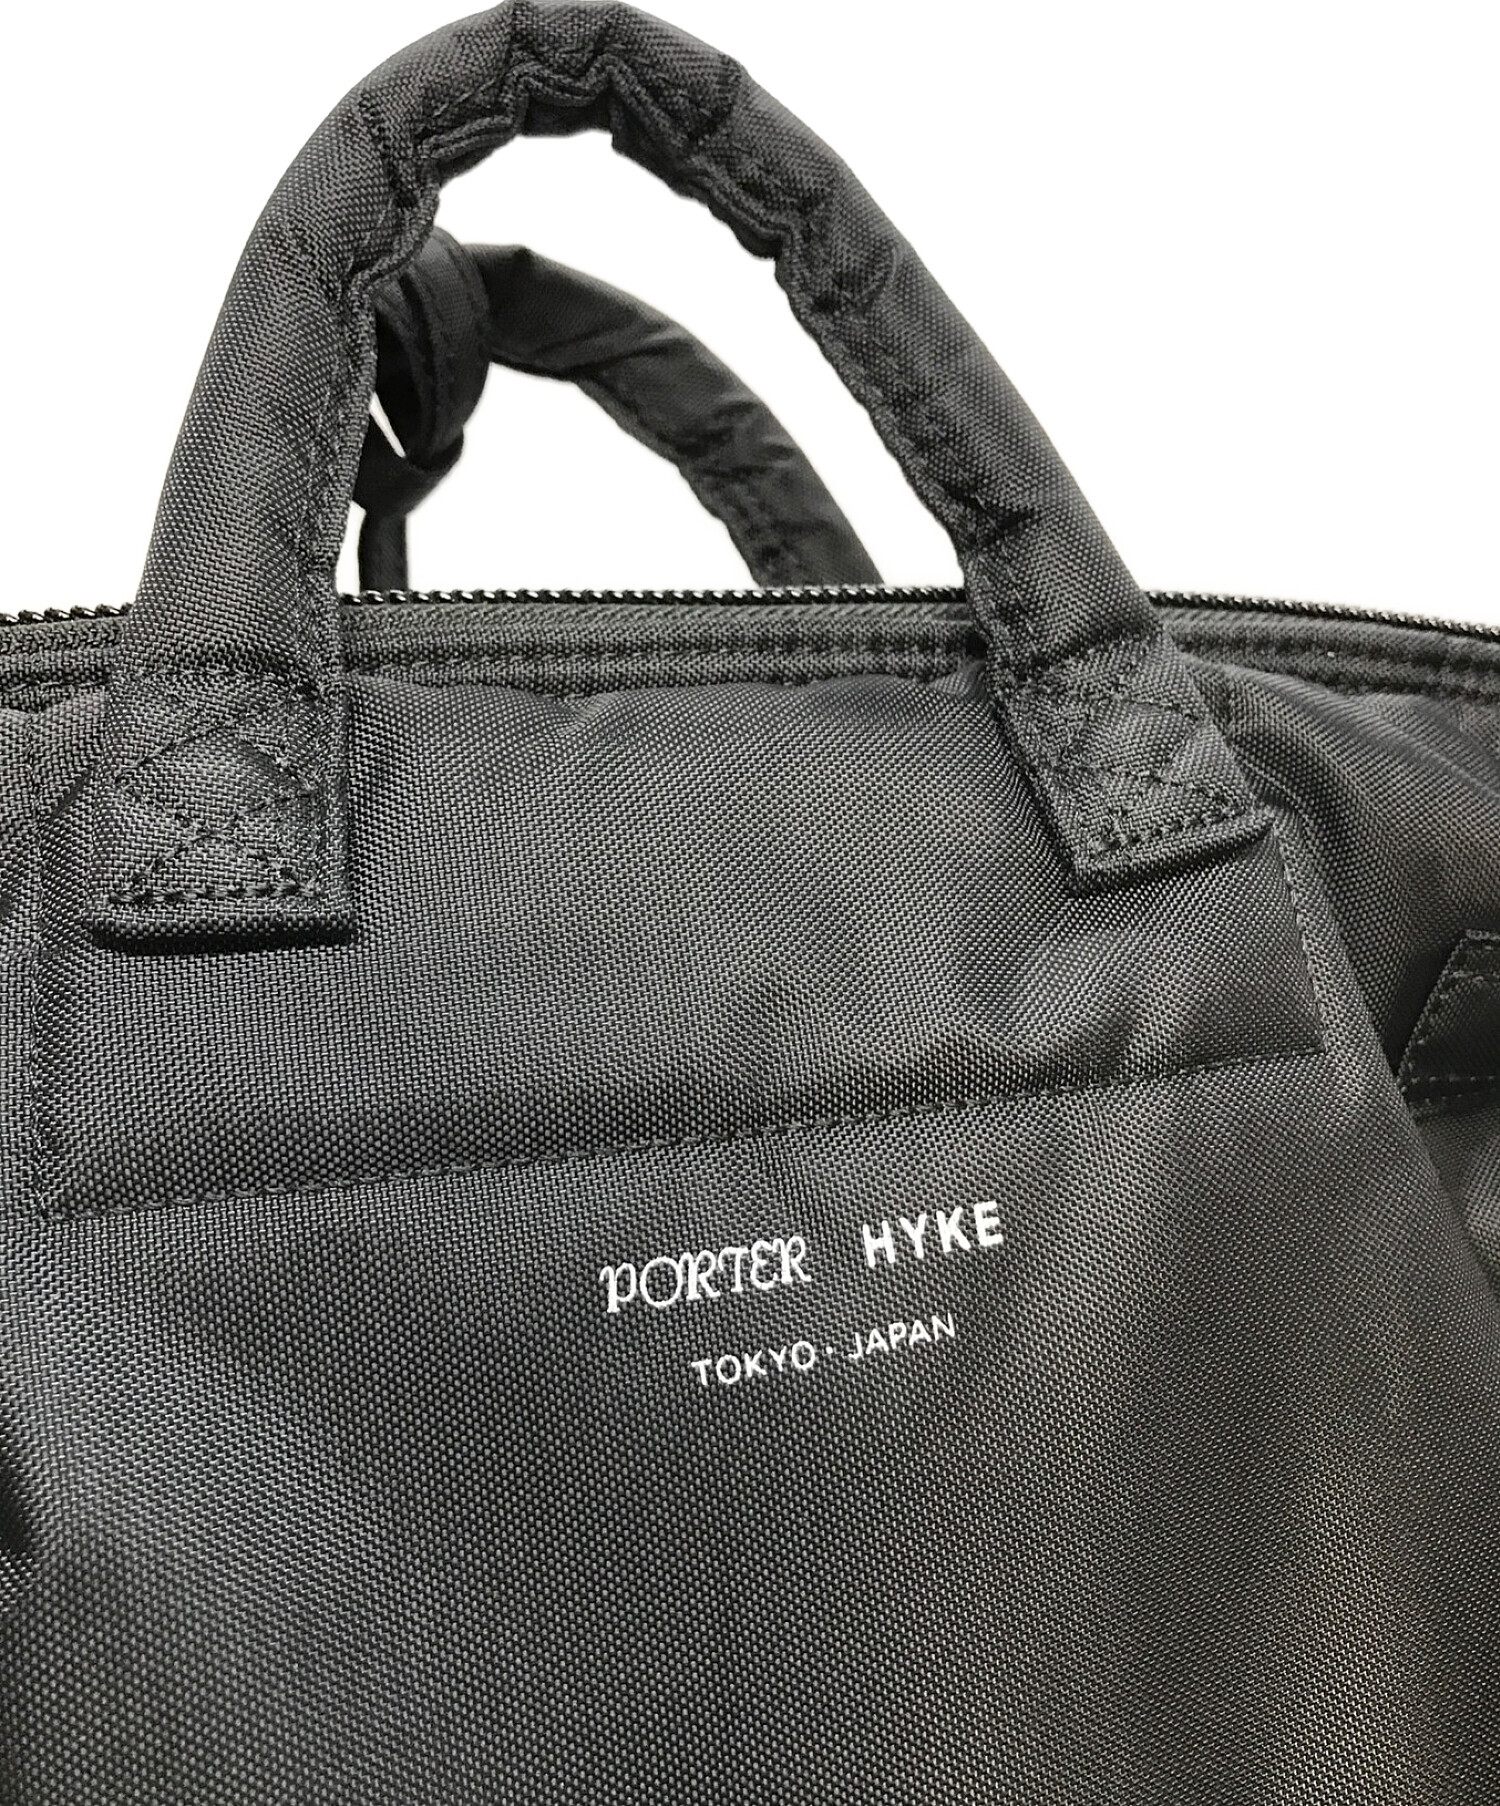 PORTER (ポーター) HYKE (ハイク) HELMET BAG large ブラック